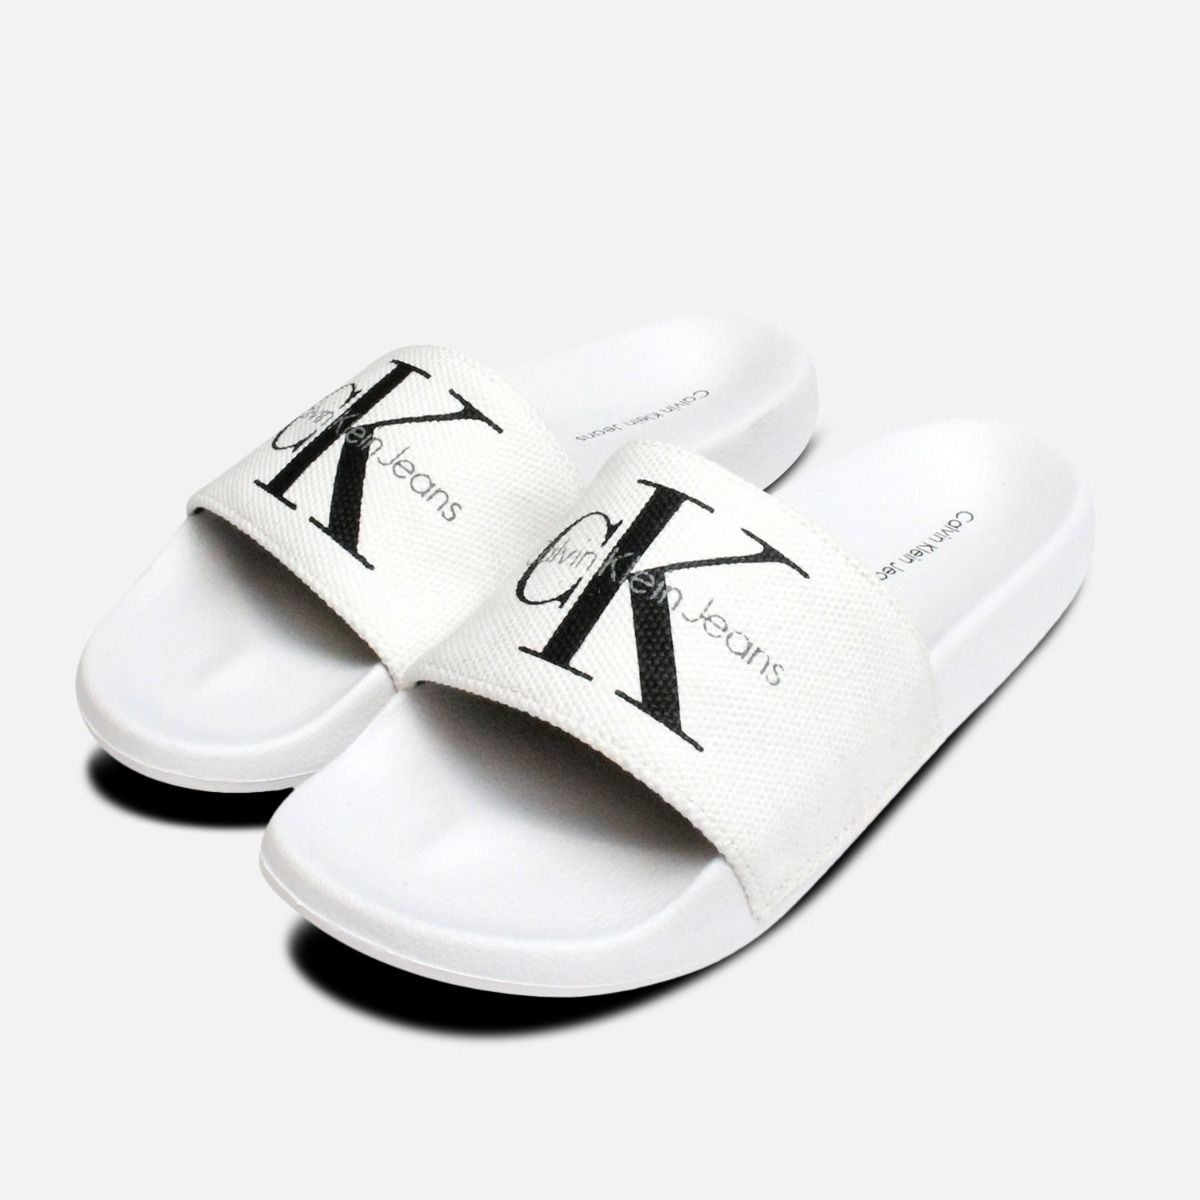 white canvas sandals